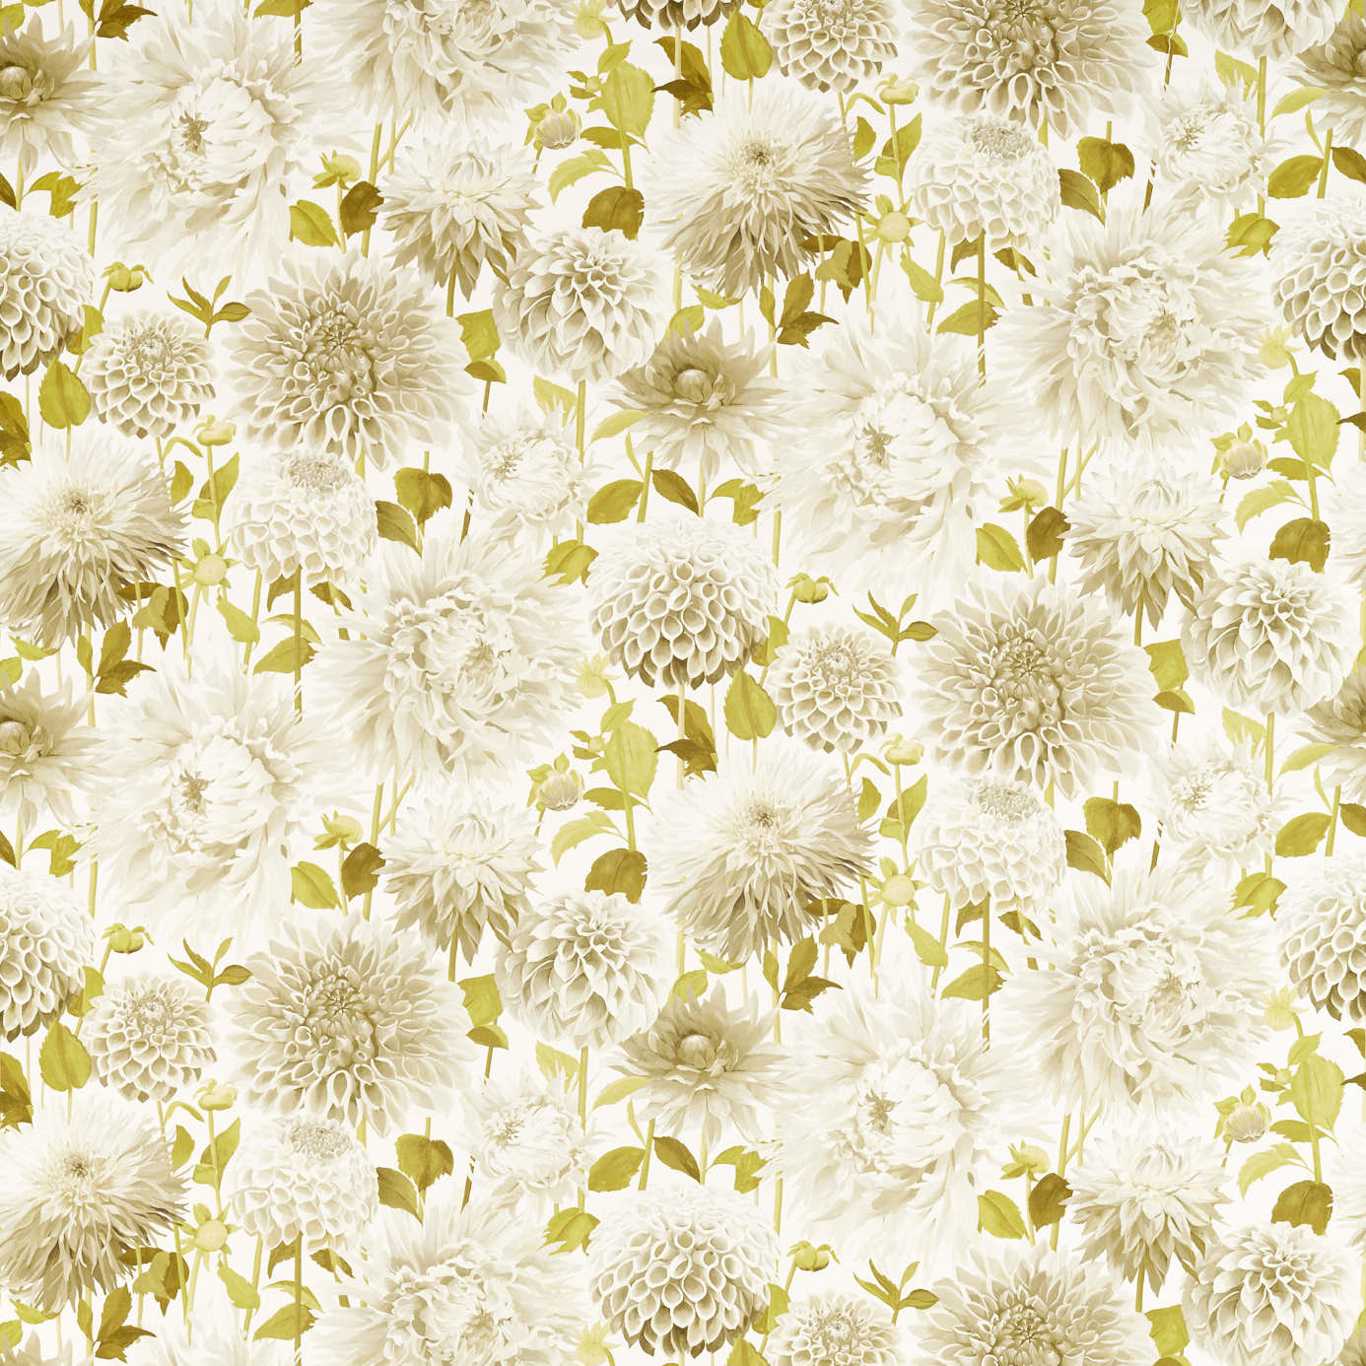 Dahlia Fabric by Harlequin - HQN2121084 - Fig Blossom/Nectar/Awakening